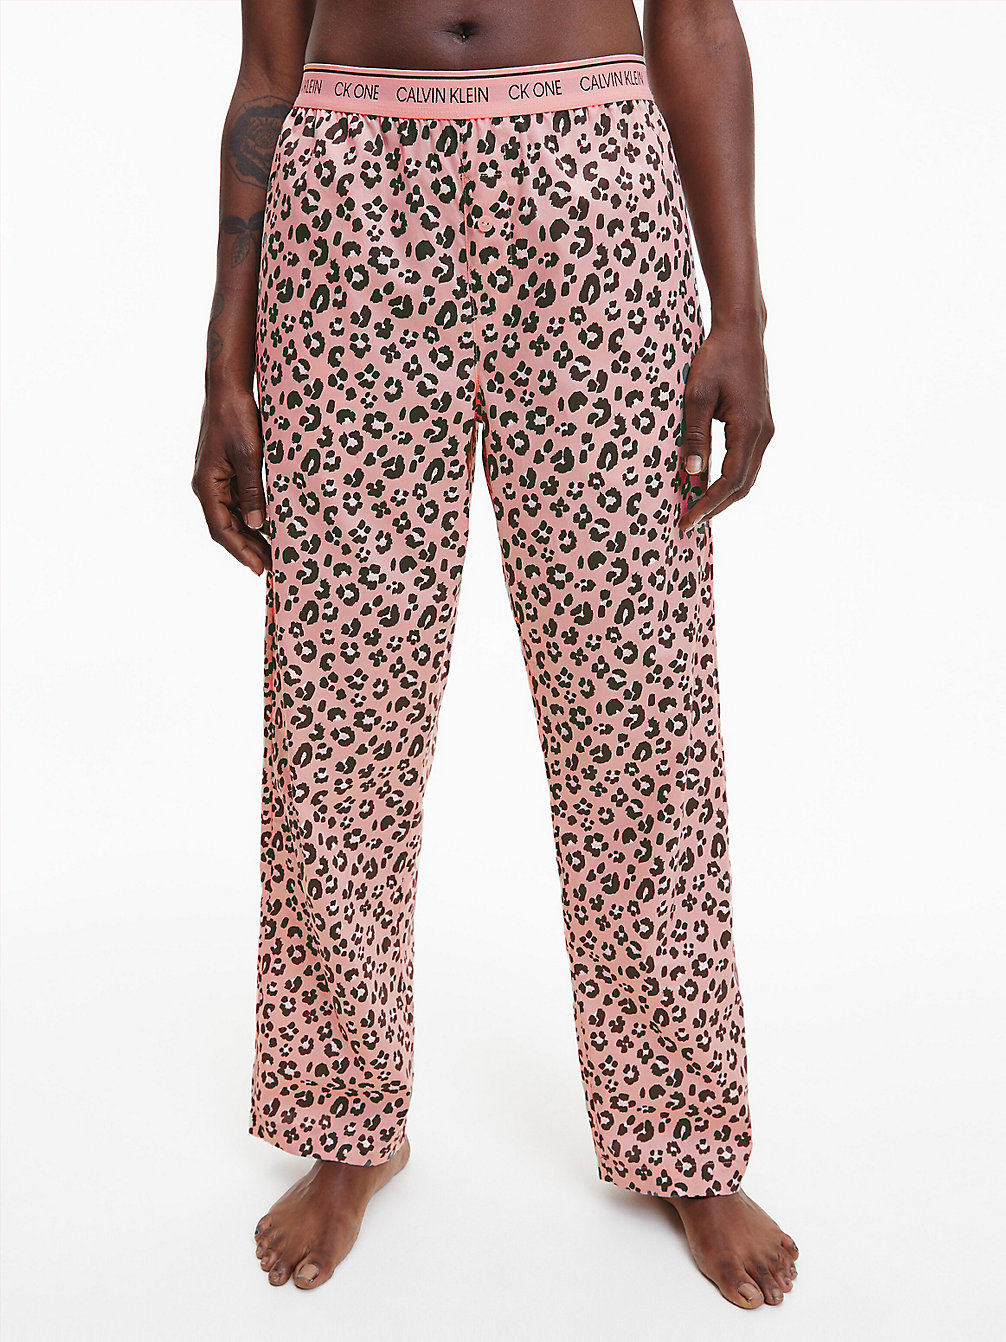 STEPHEN LEOPARD PRINT_PEACH MELBA Pyjama Pants - CK One undefined women Calvin Klein